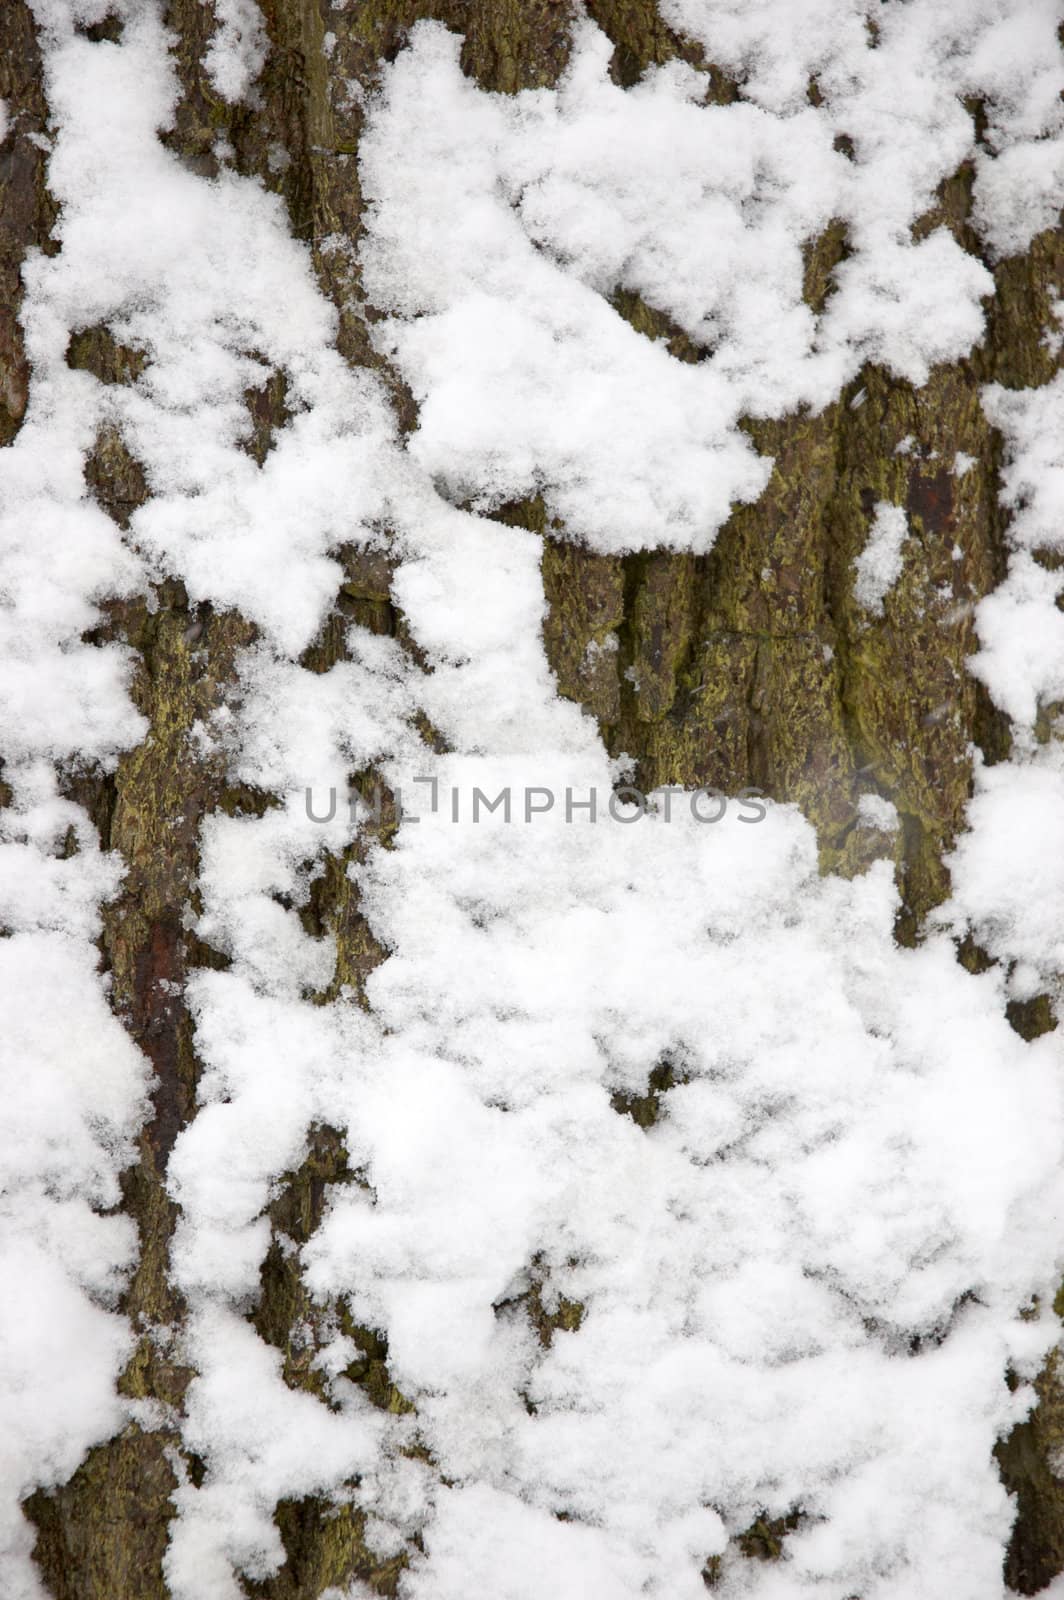 Snow on a tree trunk by mbtaichi